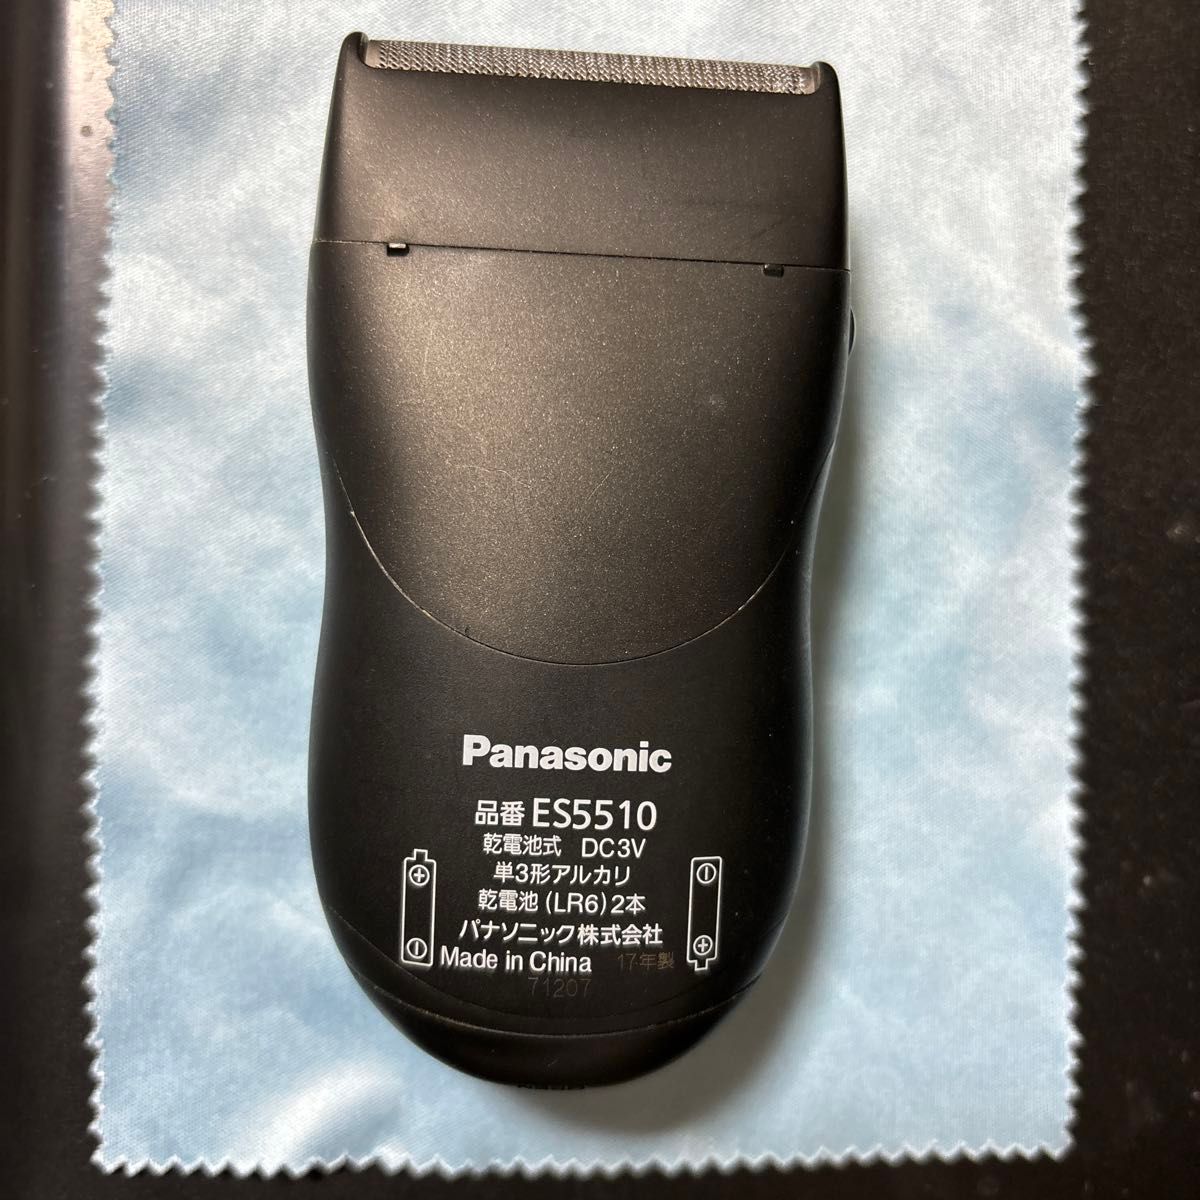 Panasonic パナソニック 髭剃り スーパーレザー シルバー調 電動シェーバー ひげそり 電気シェーバー ES5510